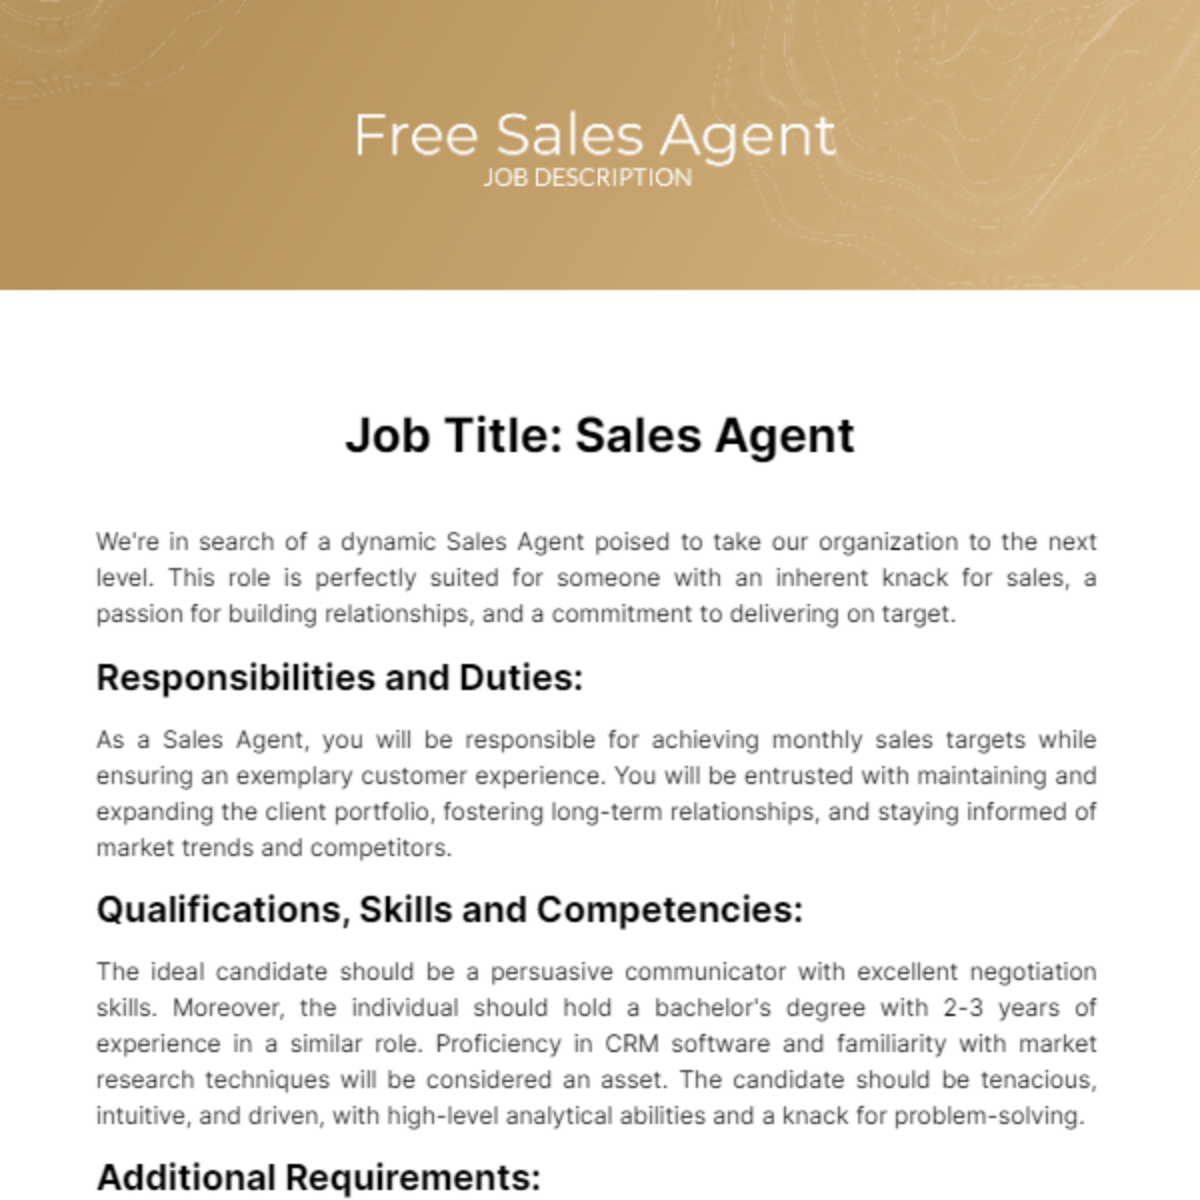 Free Sales Agent Job Description Template